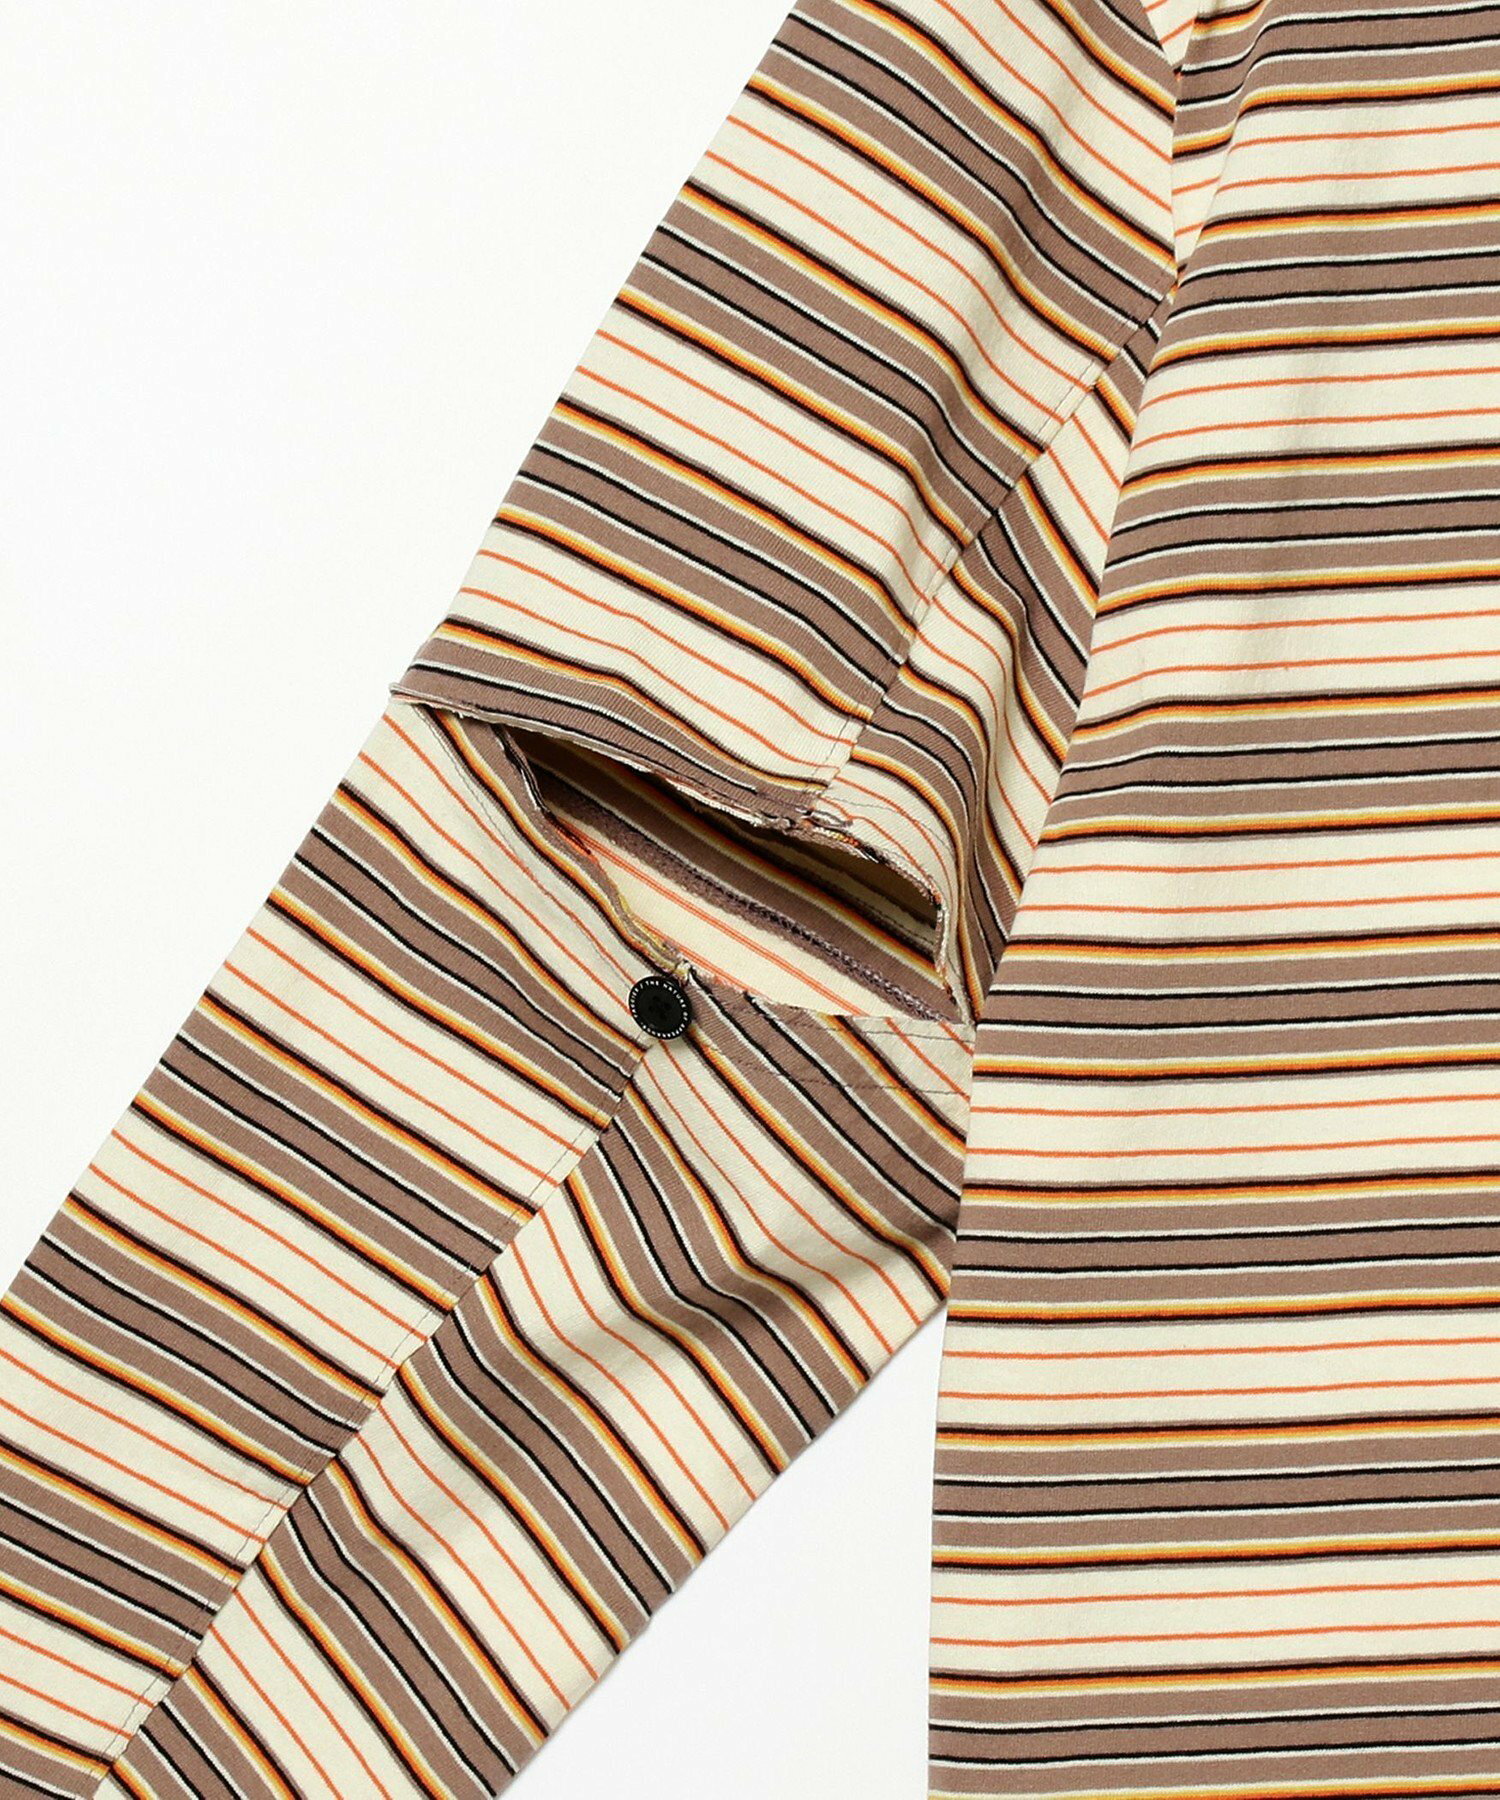 FACCIES / Vintage Striped Long Sleeve